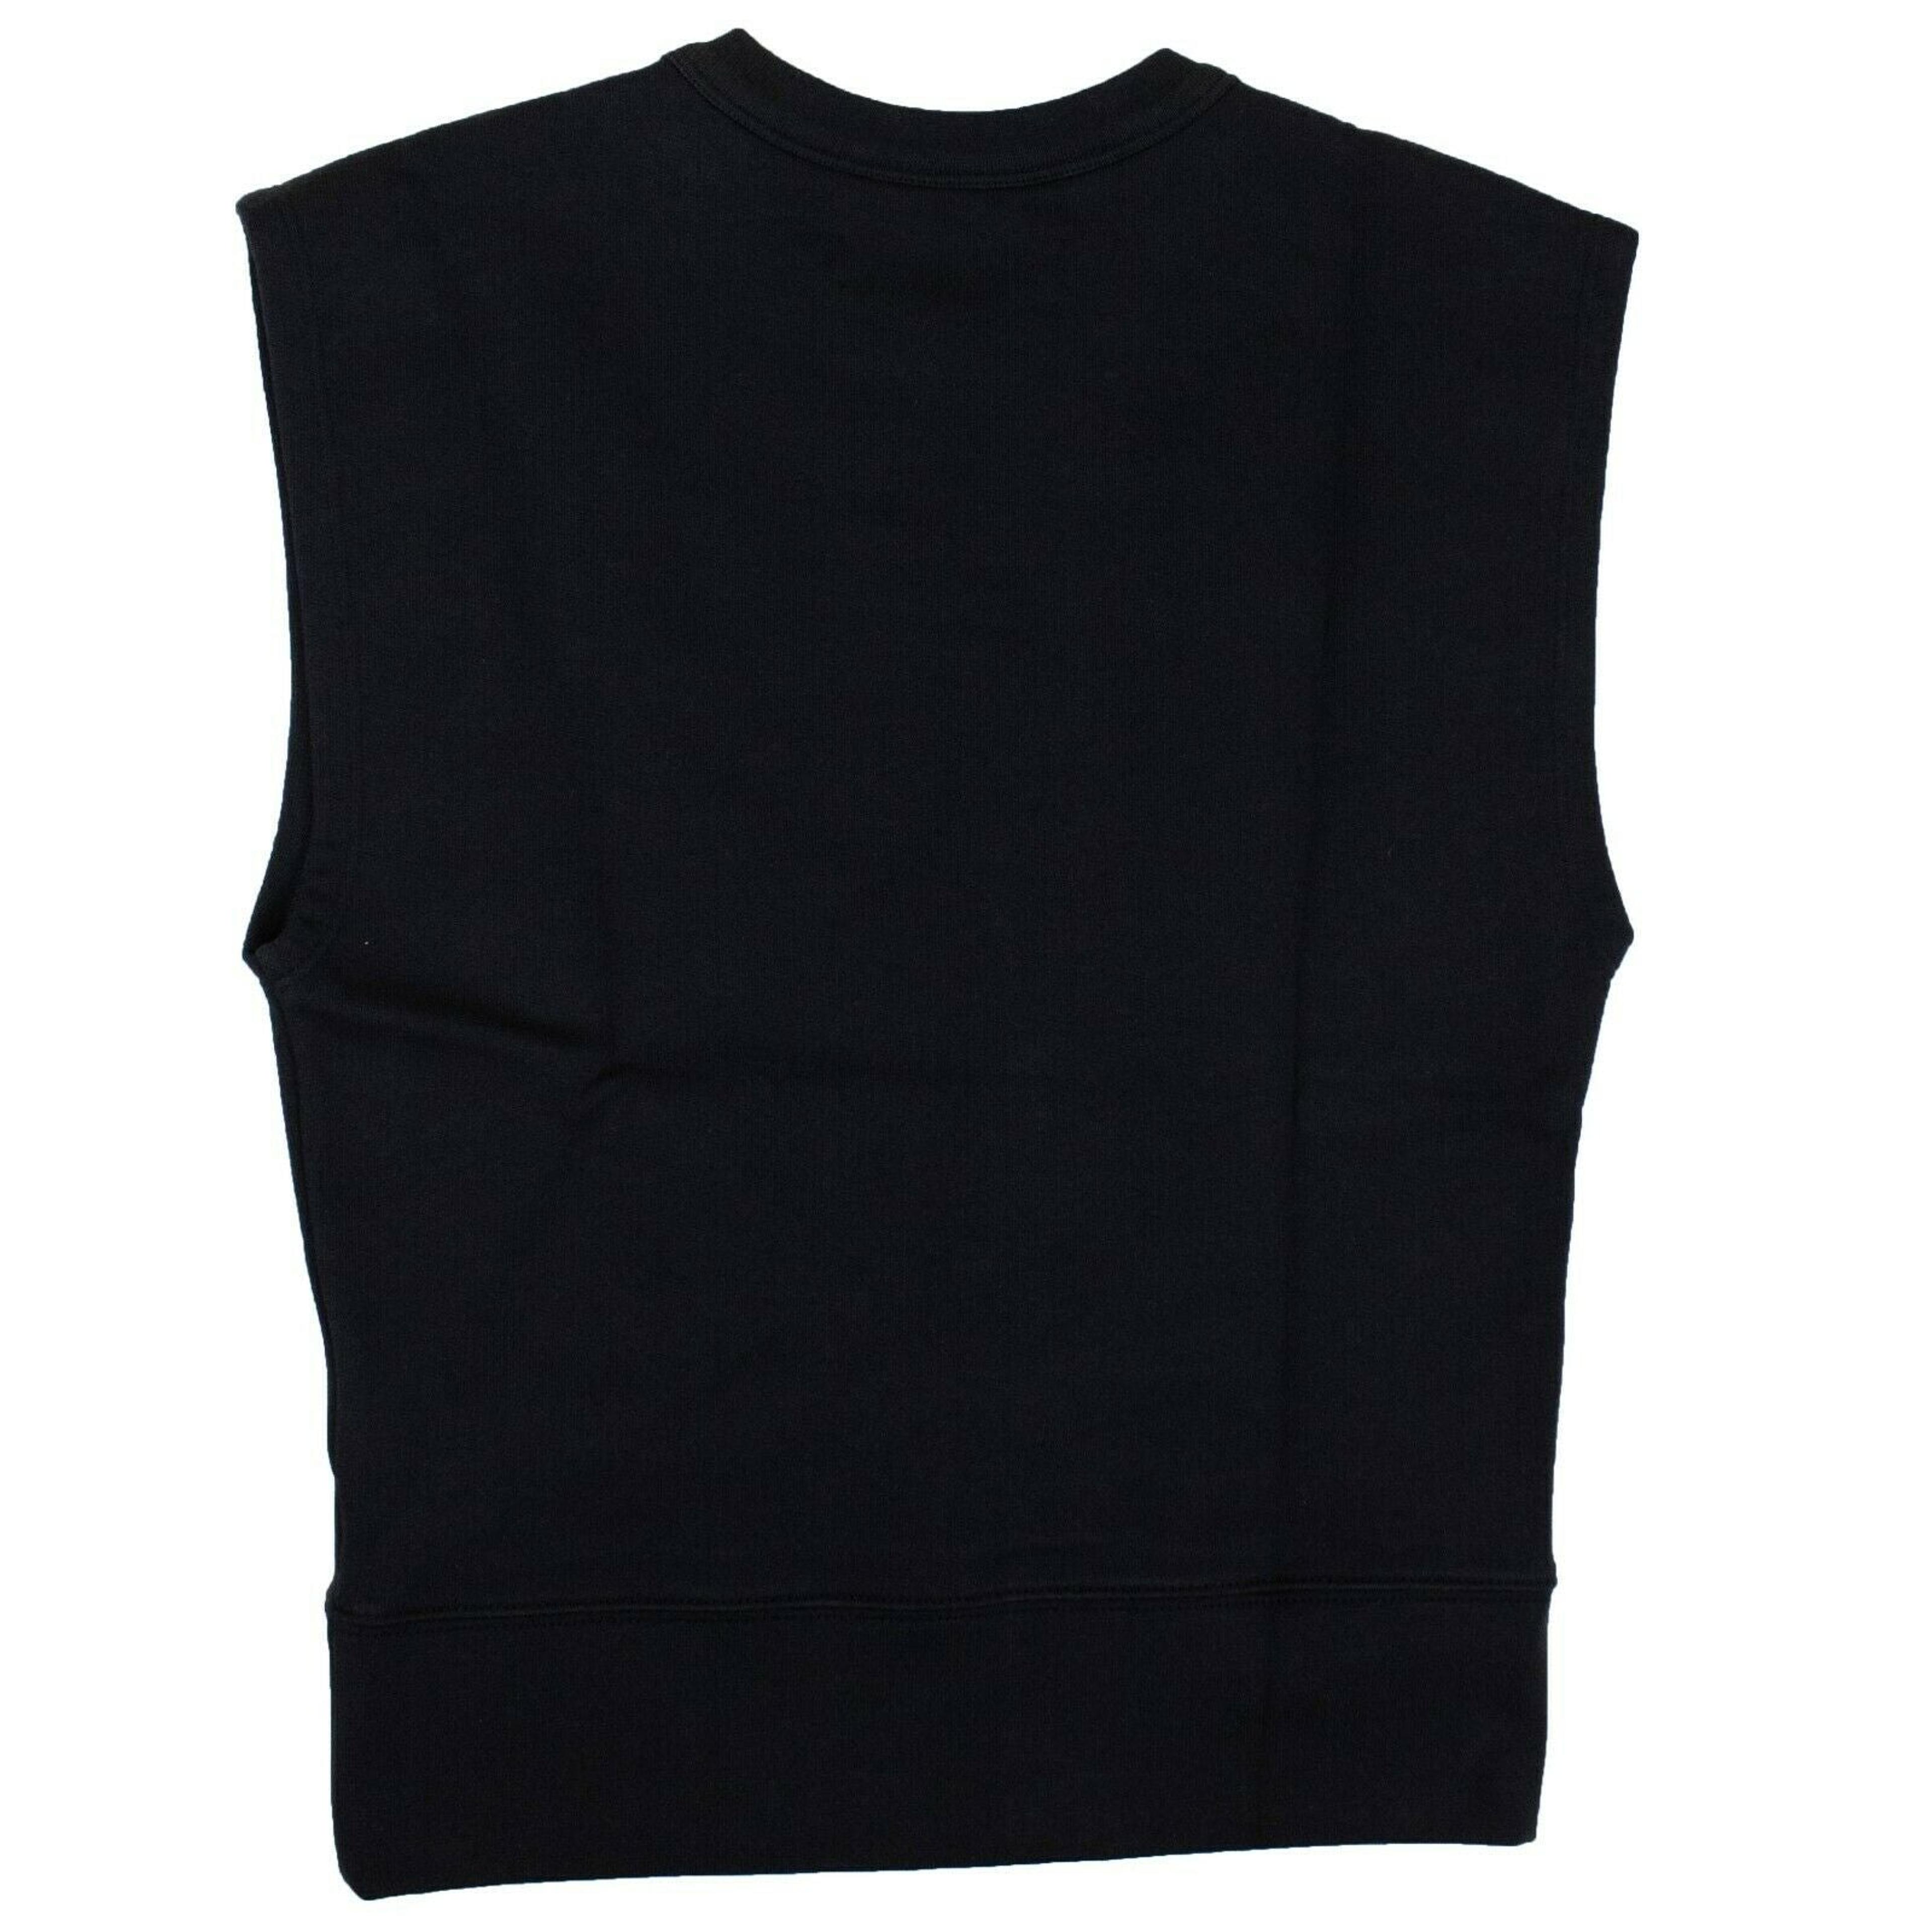 Alternate View 1 of Navy Blue Cotton Cut-Off Sleeves Sweatshirt